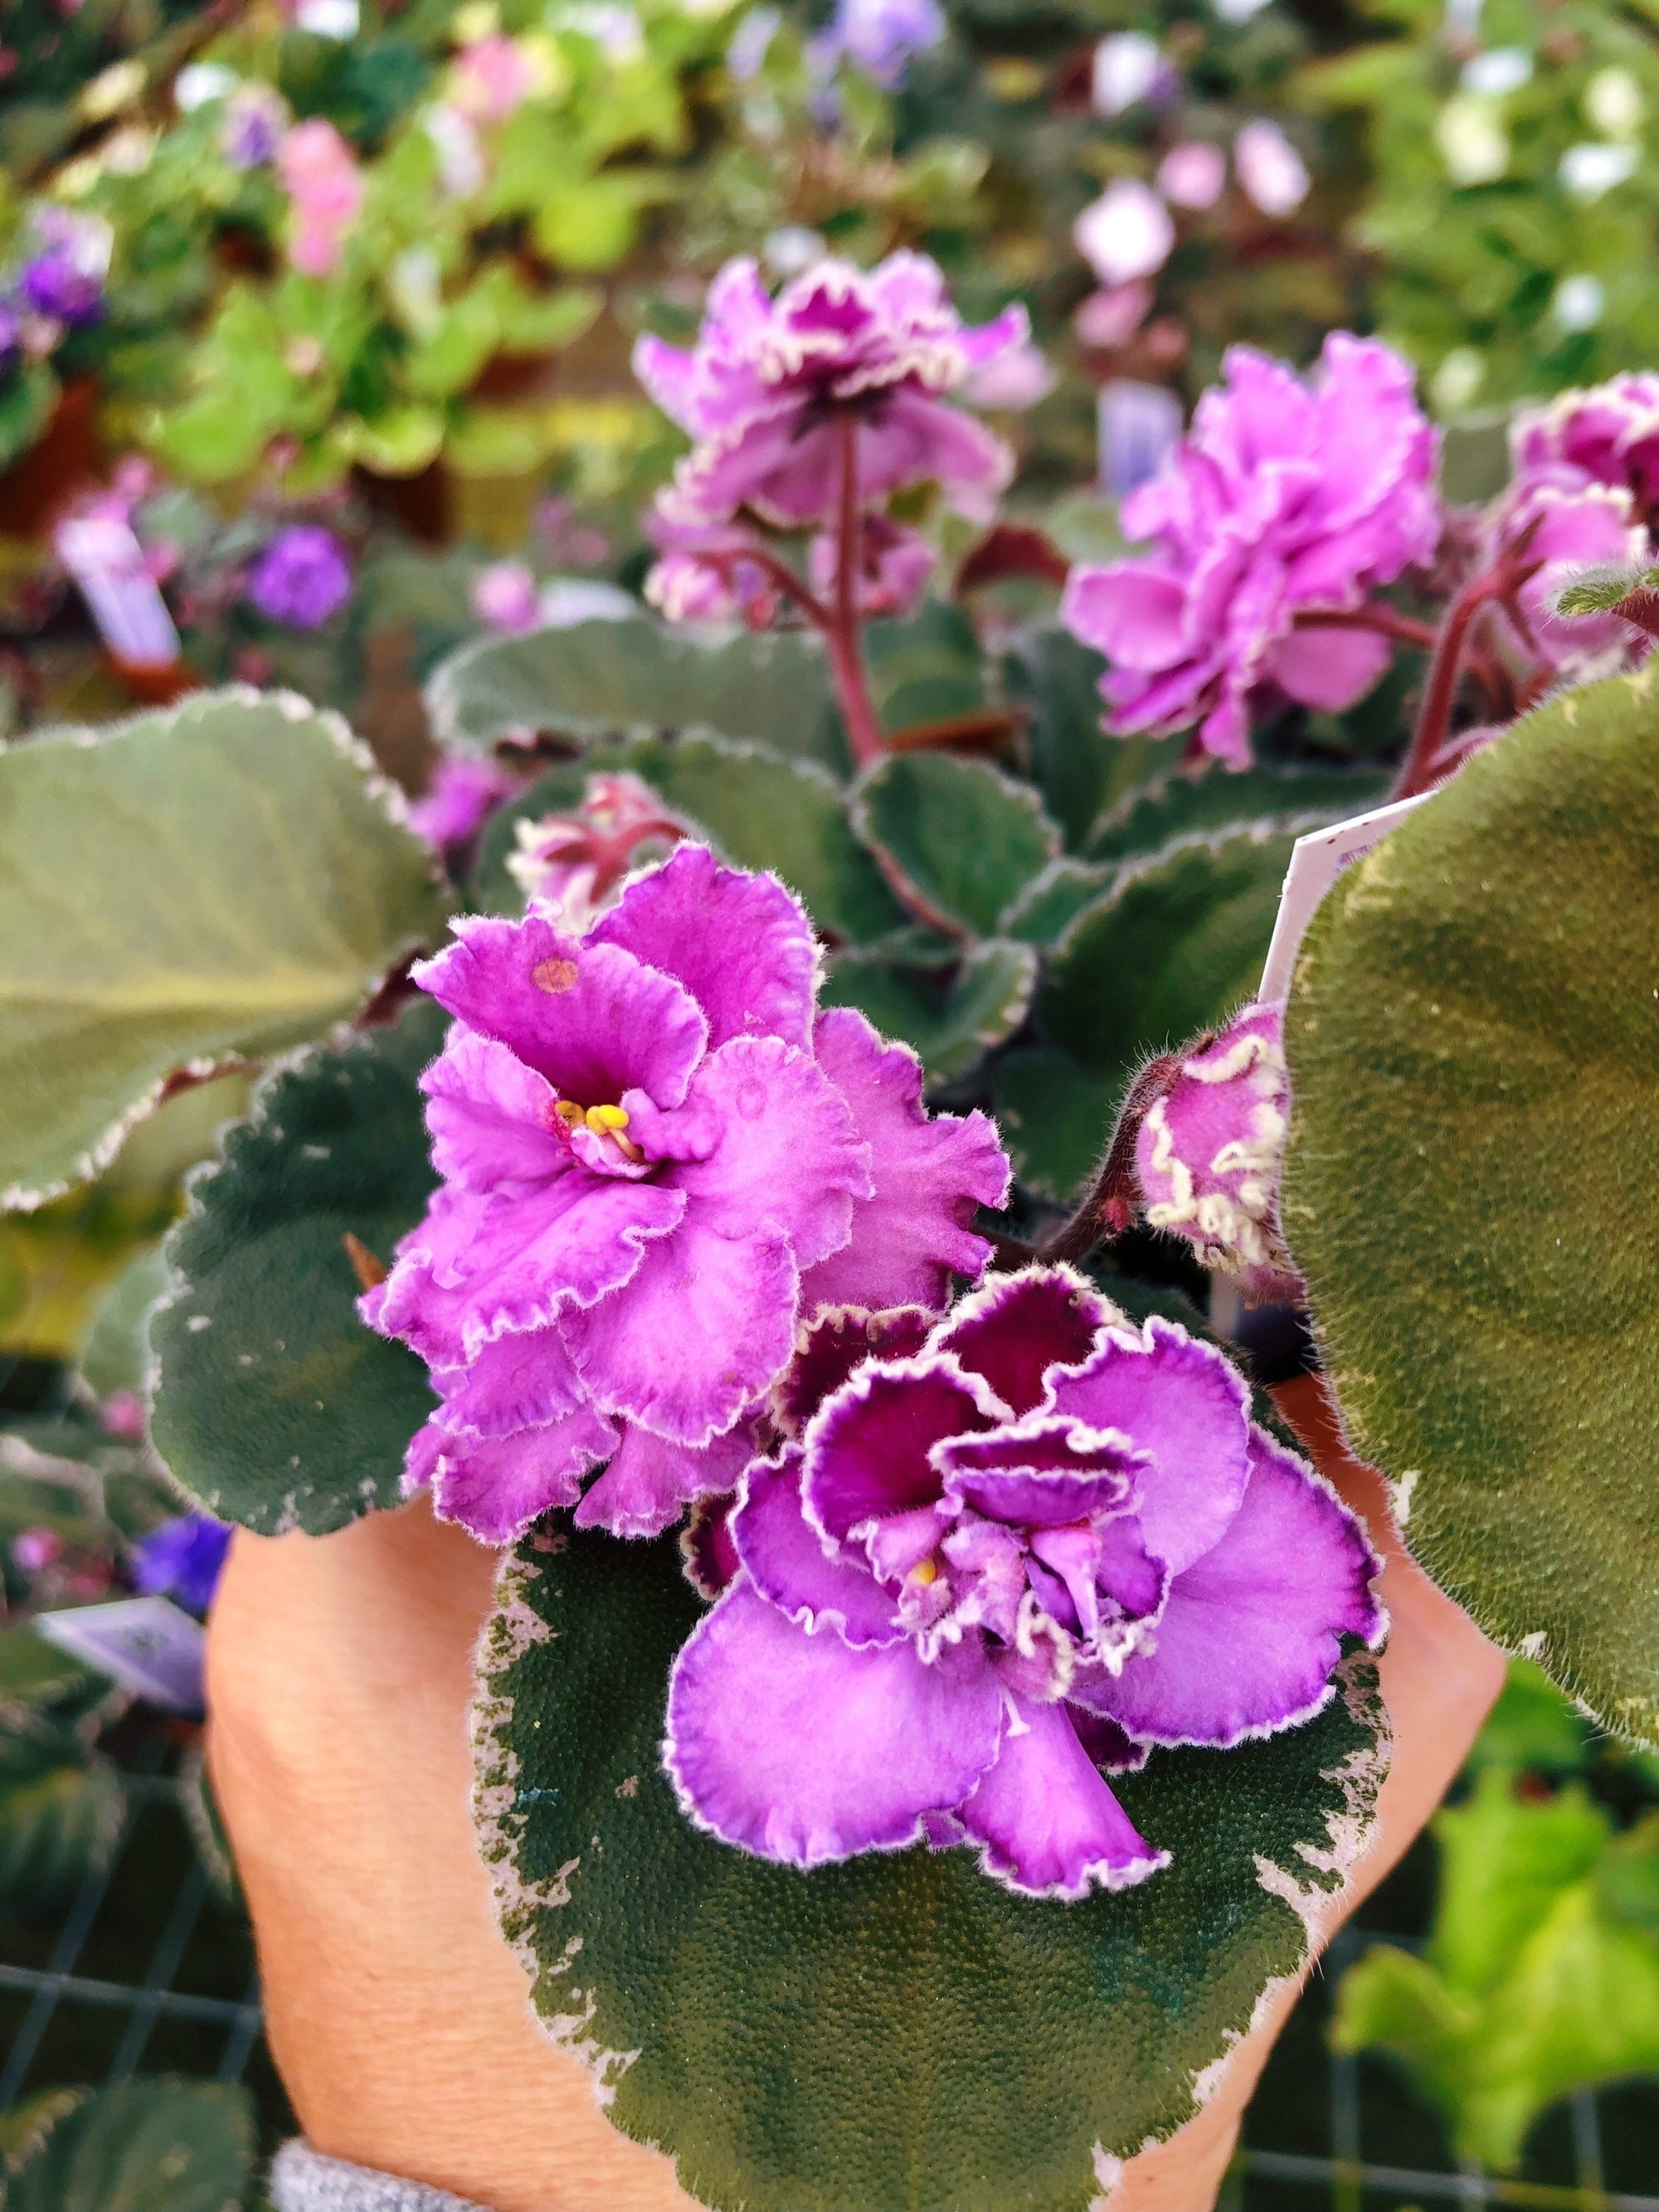 Live house plant bloom African Violet Harmony’s ‘Wrangler’s High Sierra’ garden 4” pot flower Potted gift